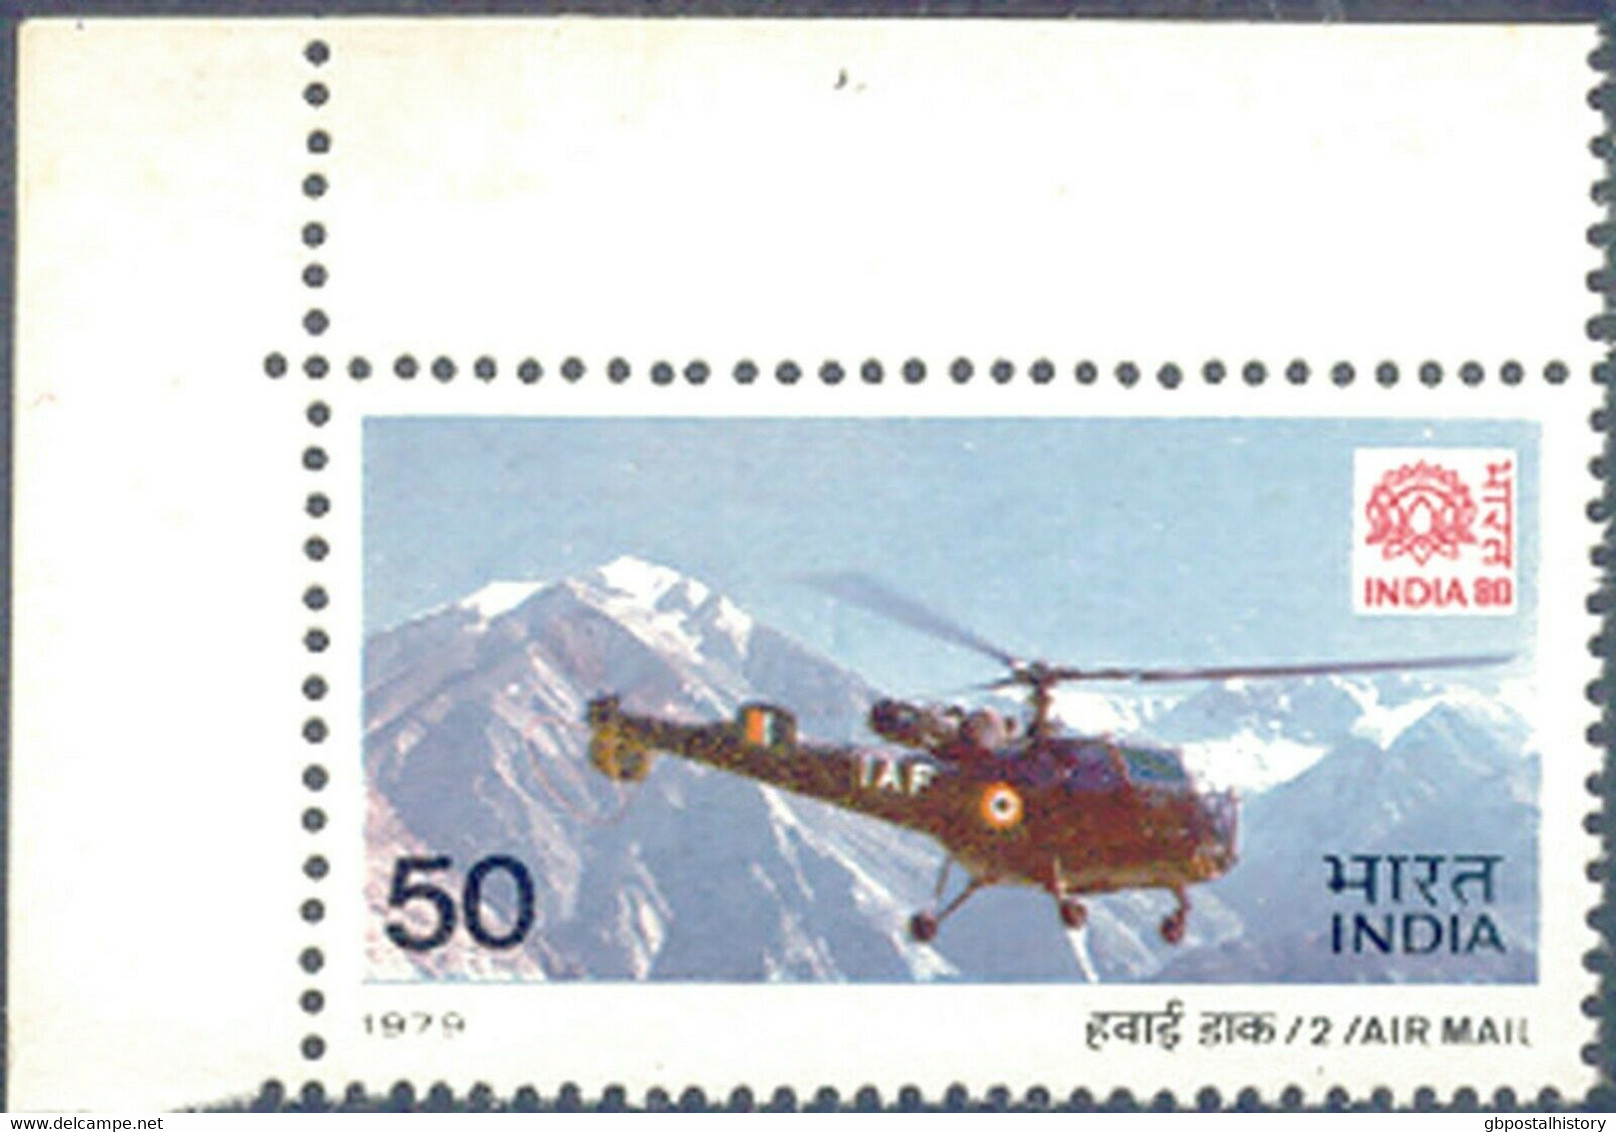 INDIA 1979 Int. Stamp Exhibition India '80 Chetak-Helicopter 50 P U/M VARIETY - Variétés Et Curiosités